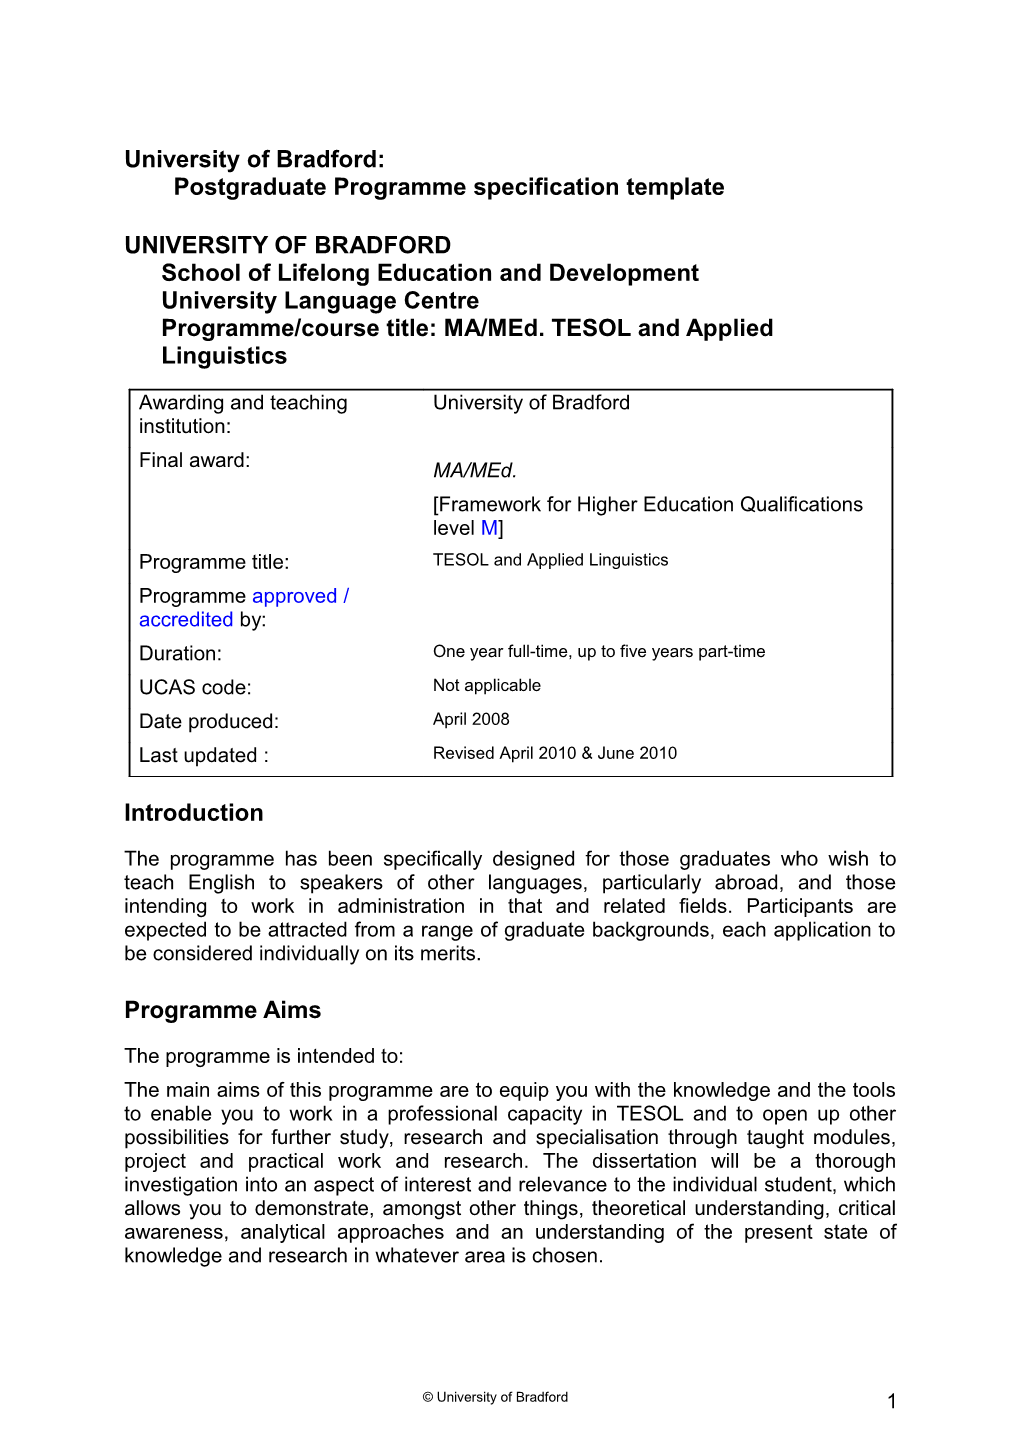 University of Bradford: Postgraduate Programme Specification Template s1